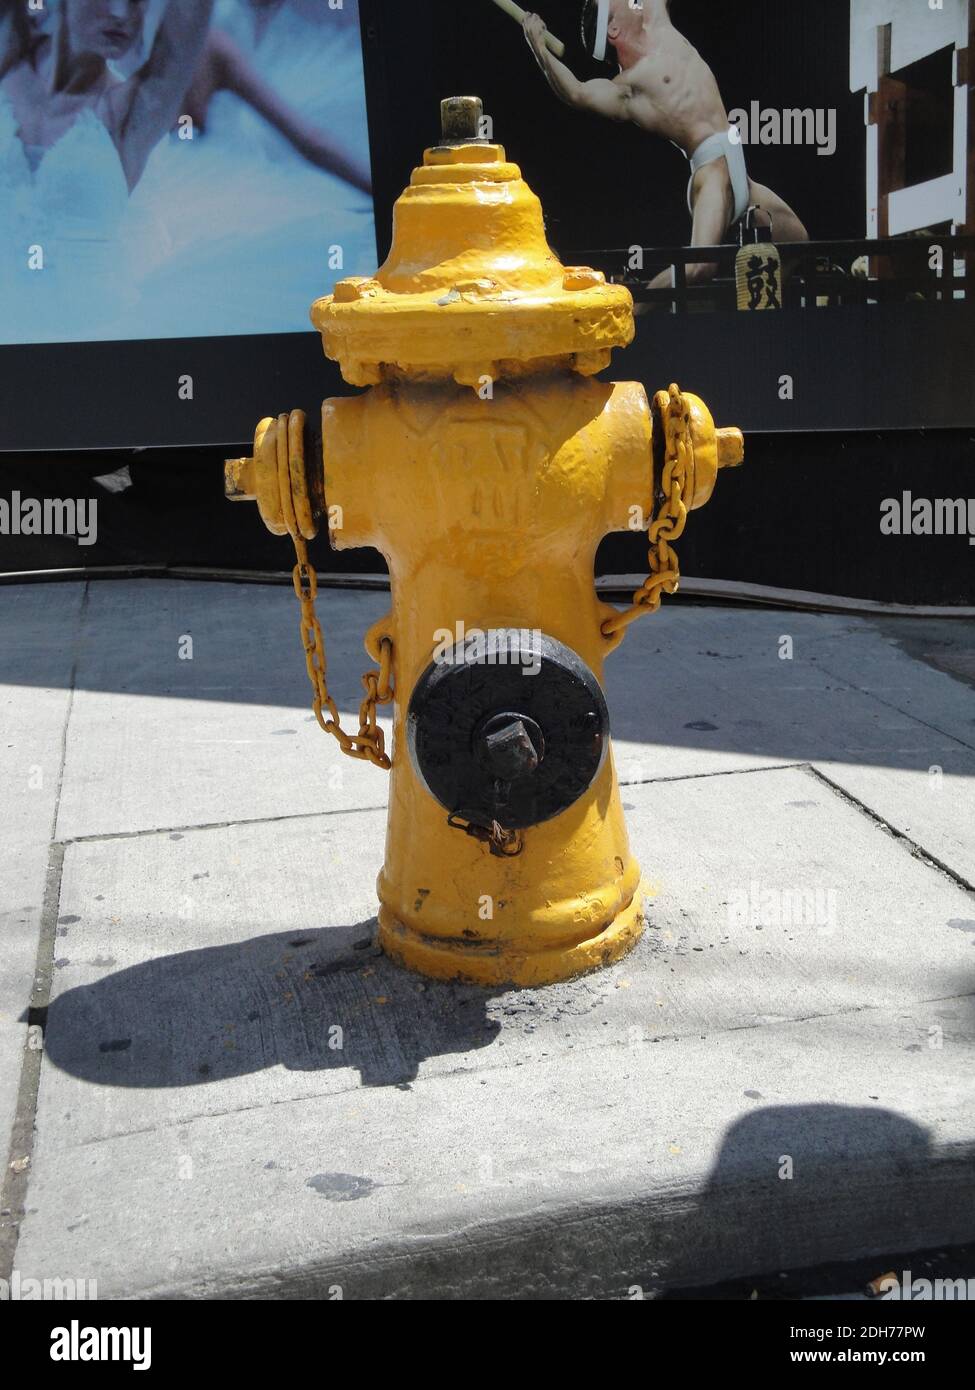 A fire hydrant in Toronto, Canada Stock Photo